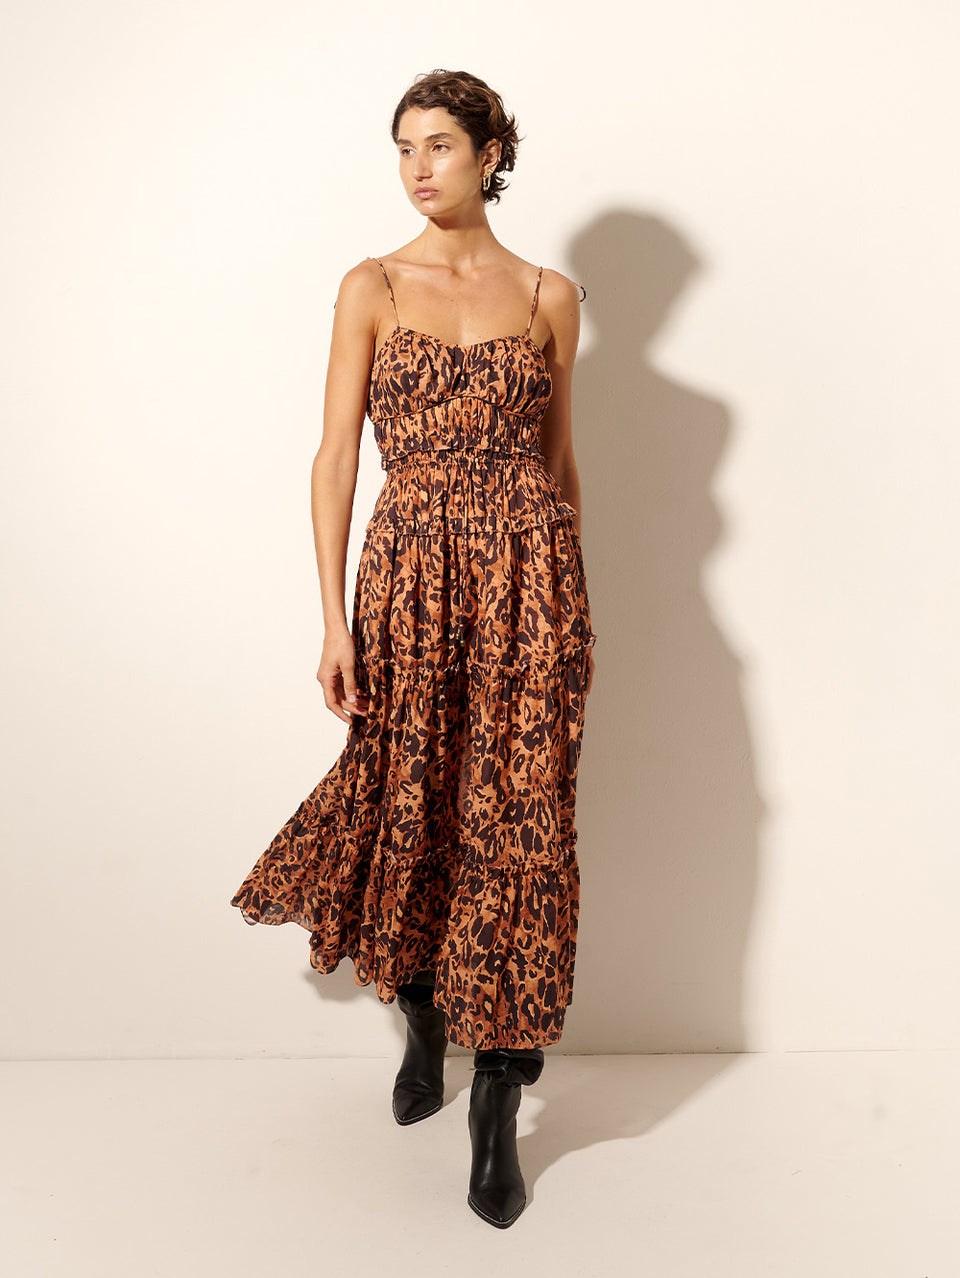 Madison Midi Dress KIVARI | Model wears orange and brown leopard midi dress